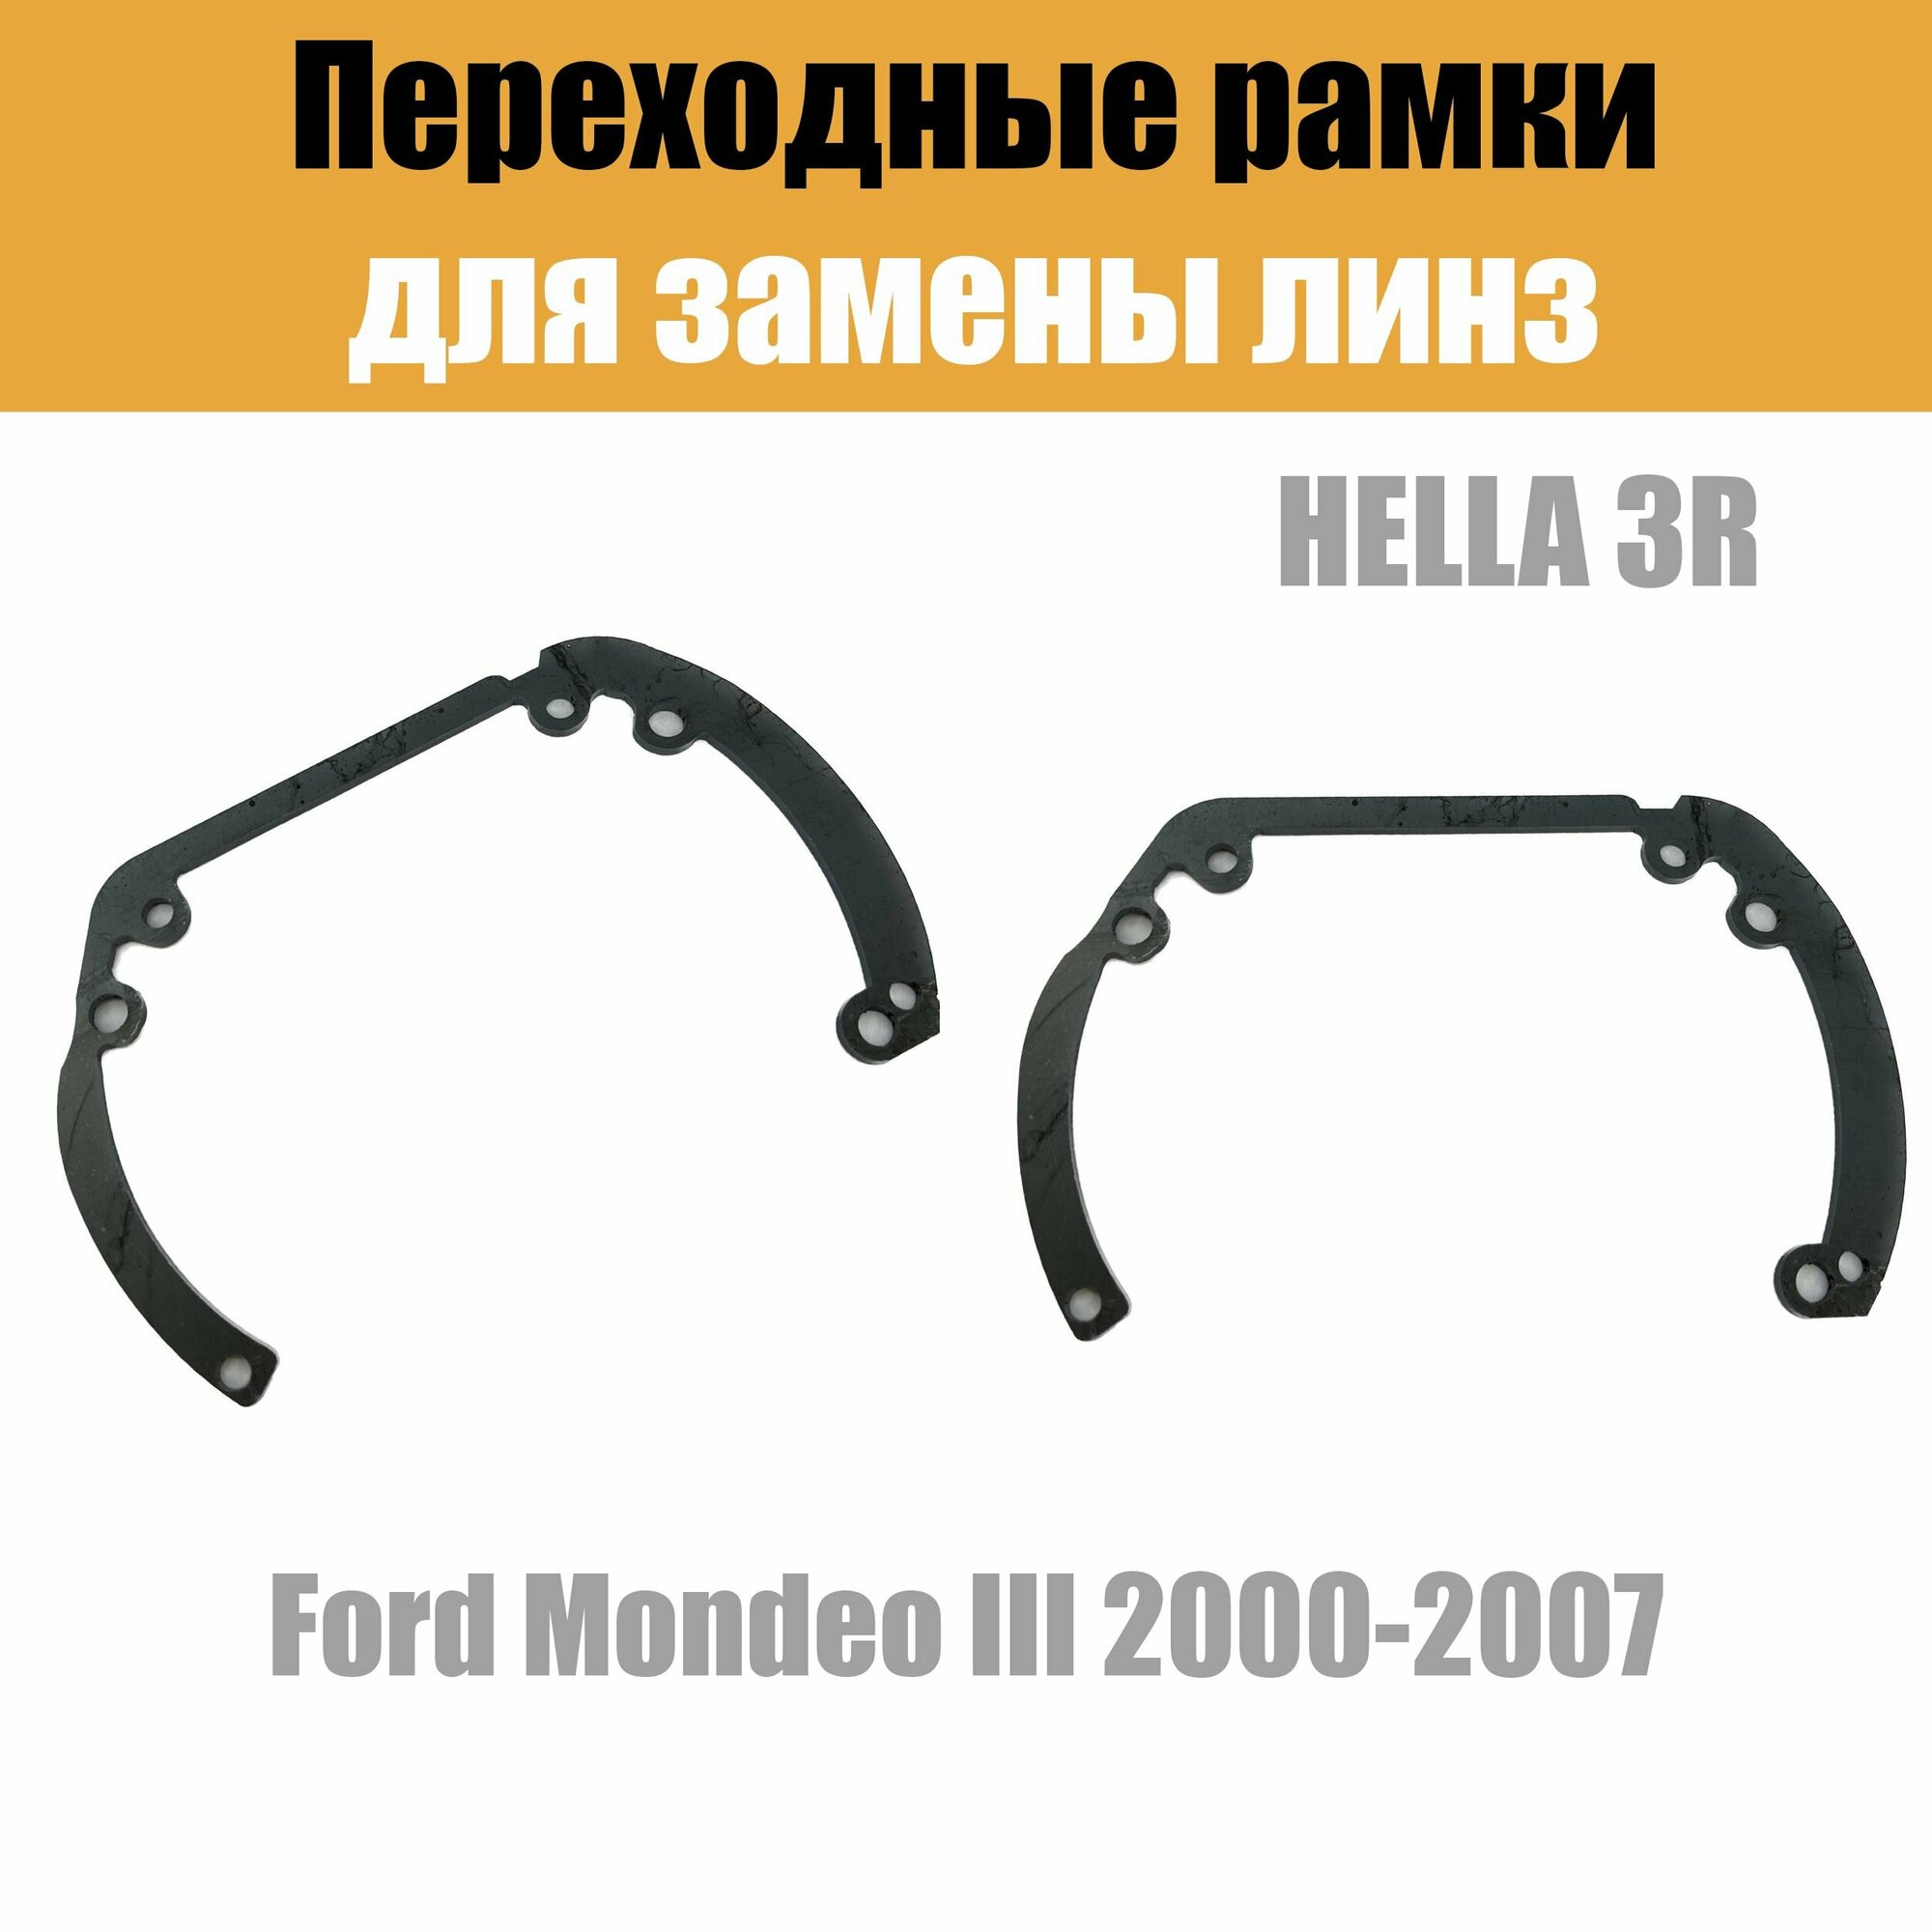 Переходные рамки для линз №6 на Ford Mondeo III (2000-2007) под модуль Hella 3R/Hella 3 (Комплект 2)